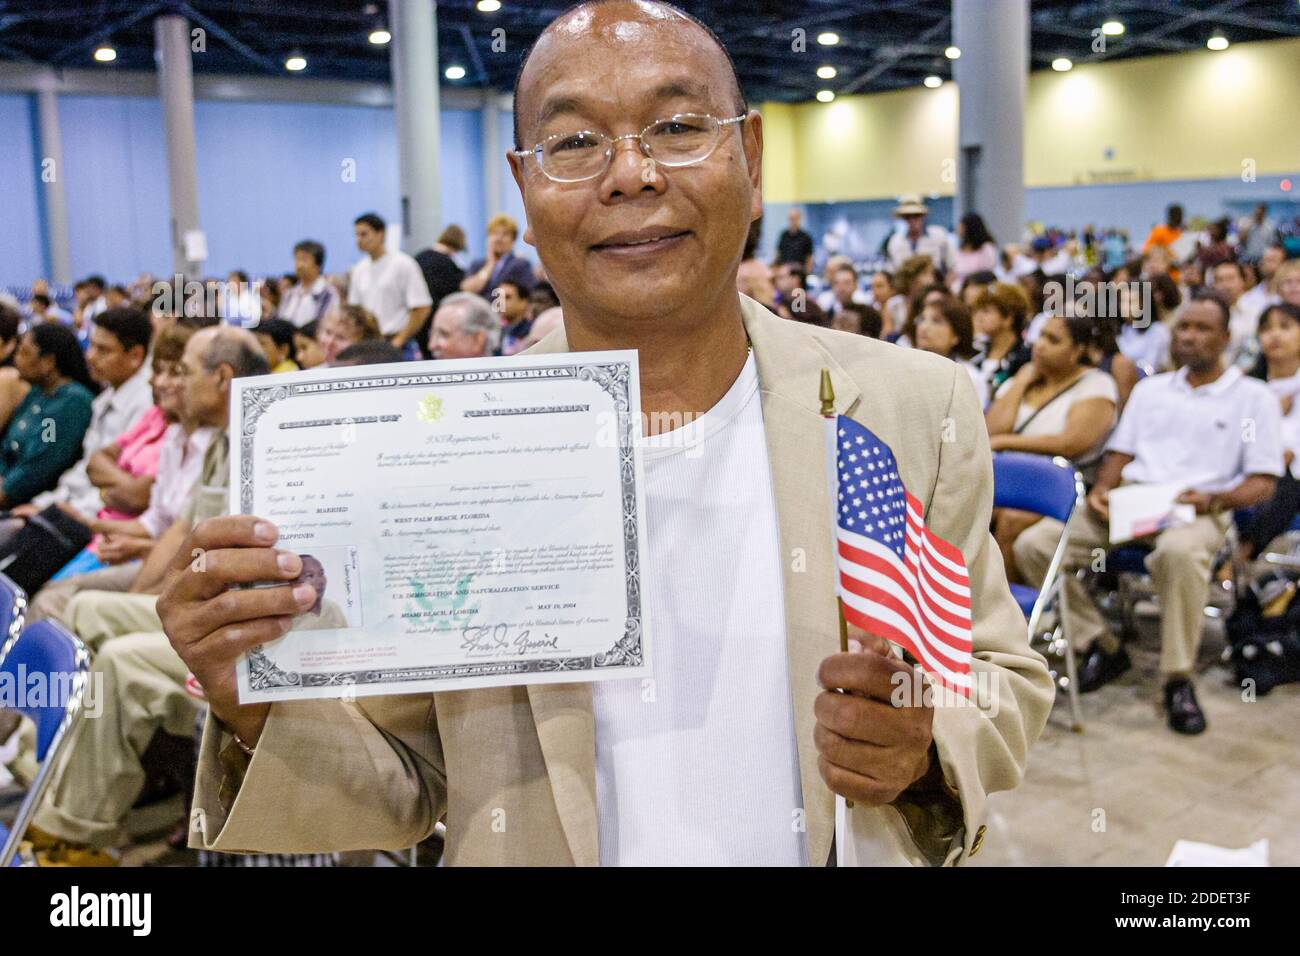 Florida,Miami Beach Convention Center,centre,naturalization ceremony oath of citizenship Pledge Allegiance,immigrants Asian man new citizen,hold holdi Stock Photo